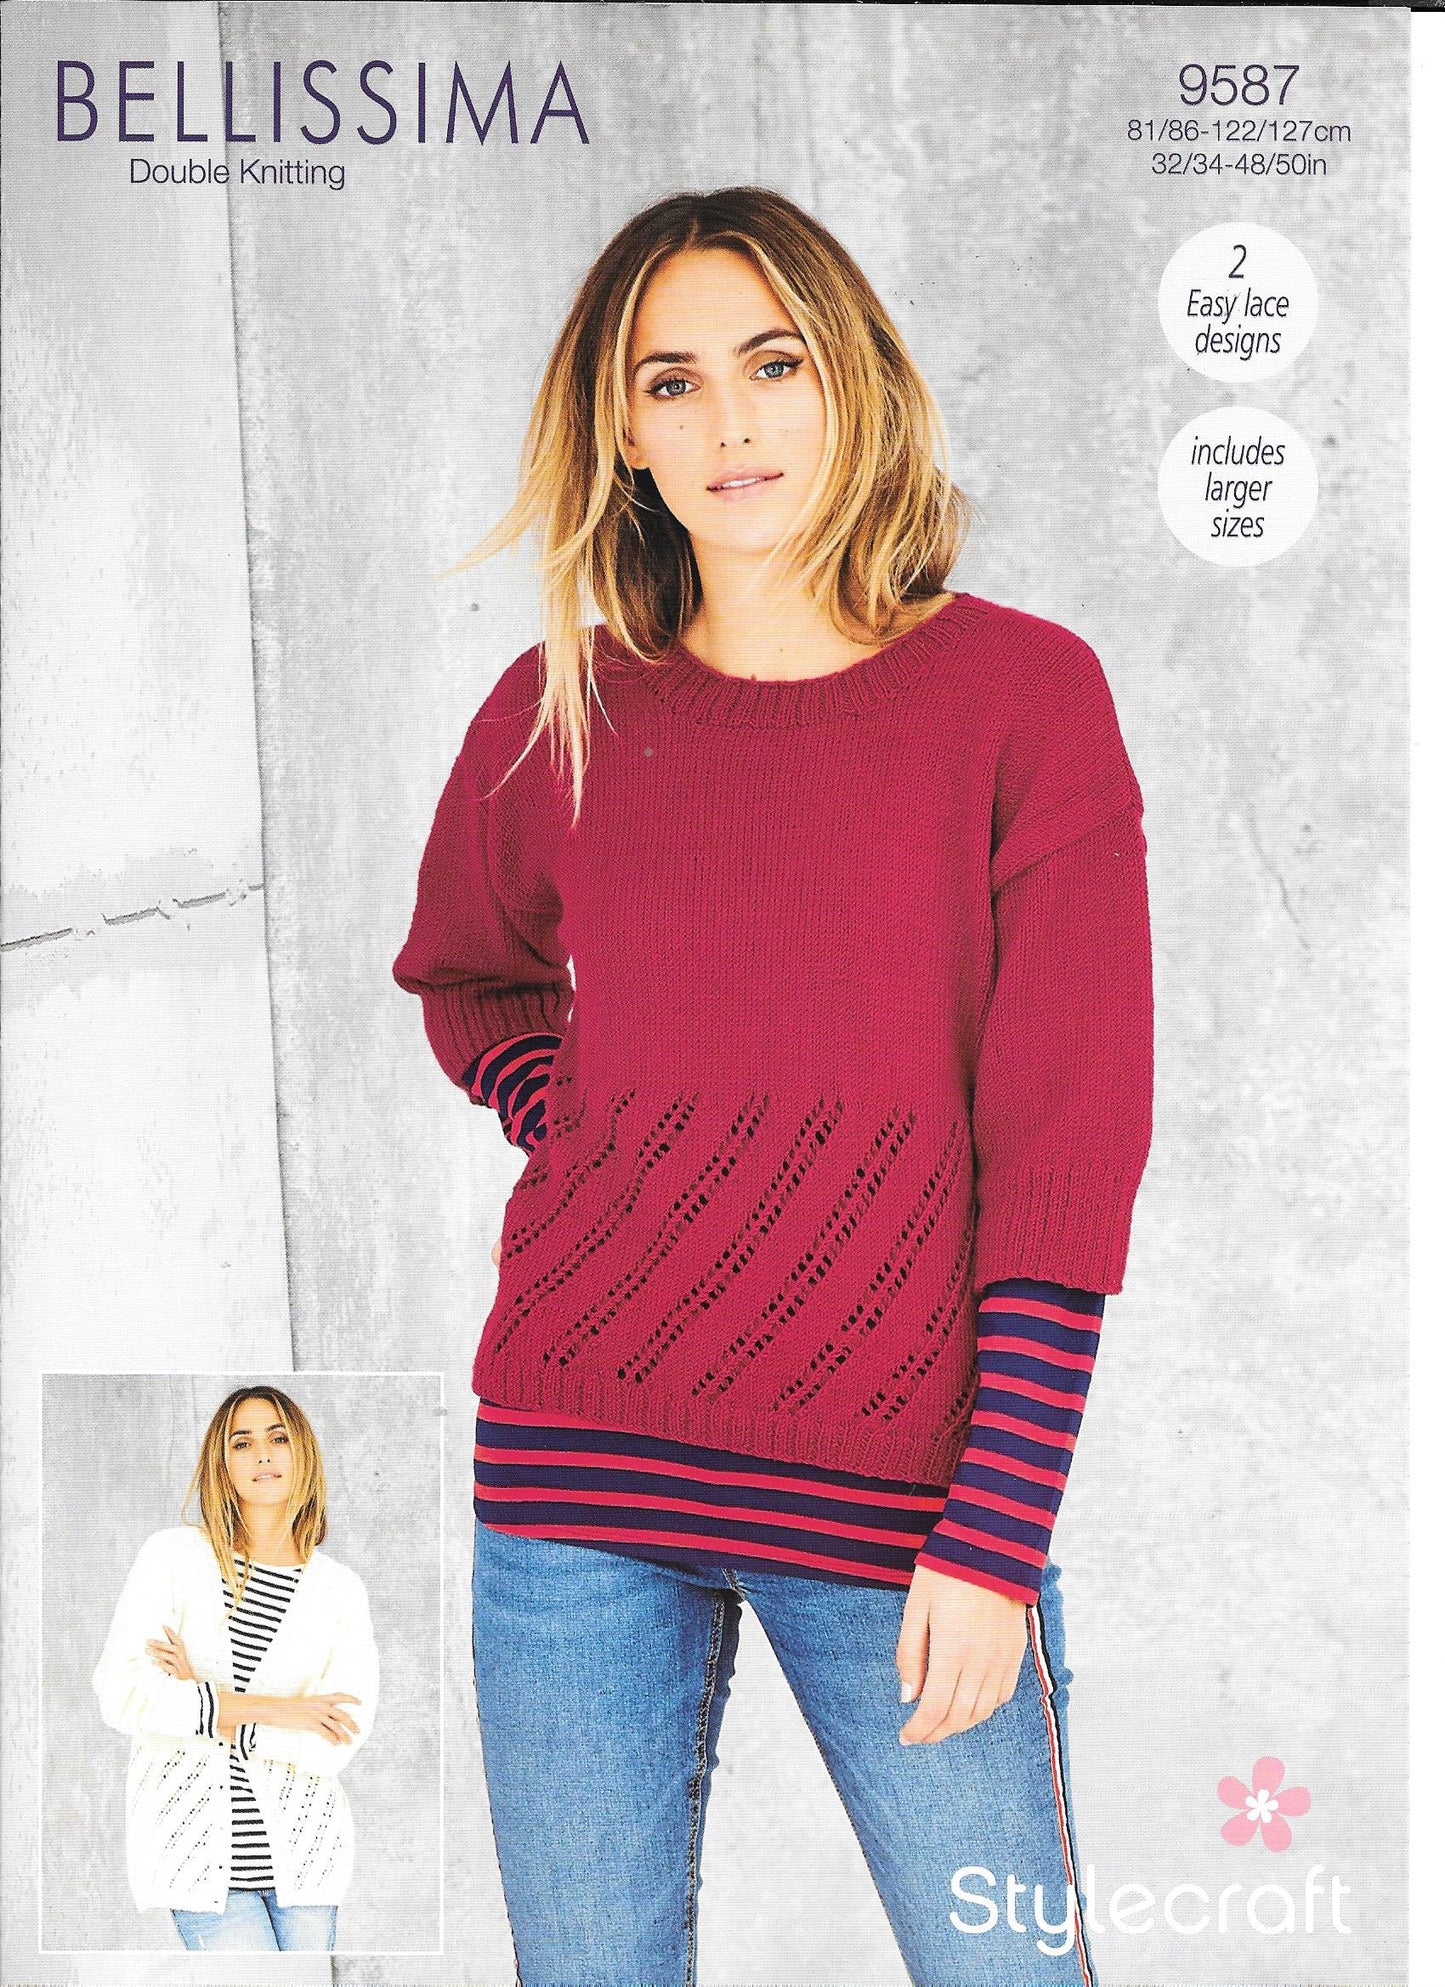 9587 Stylecraft Bellissima ladies jumper and cardigan knitting pattern